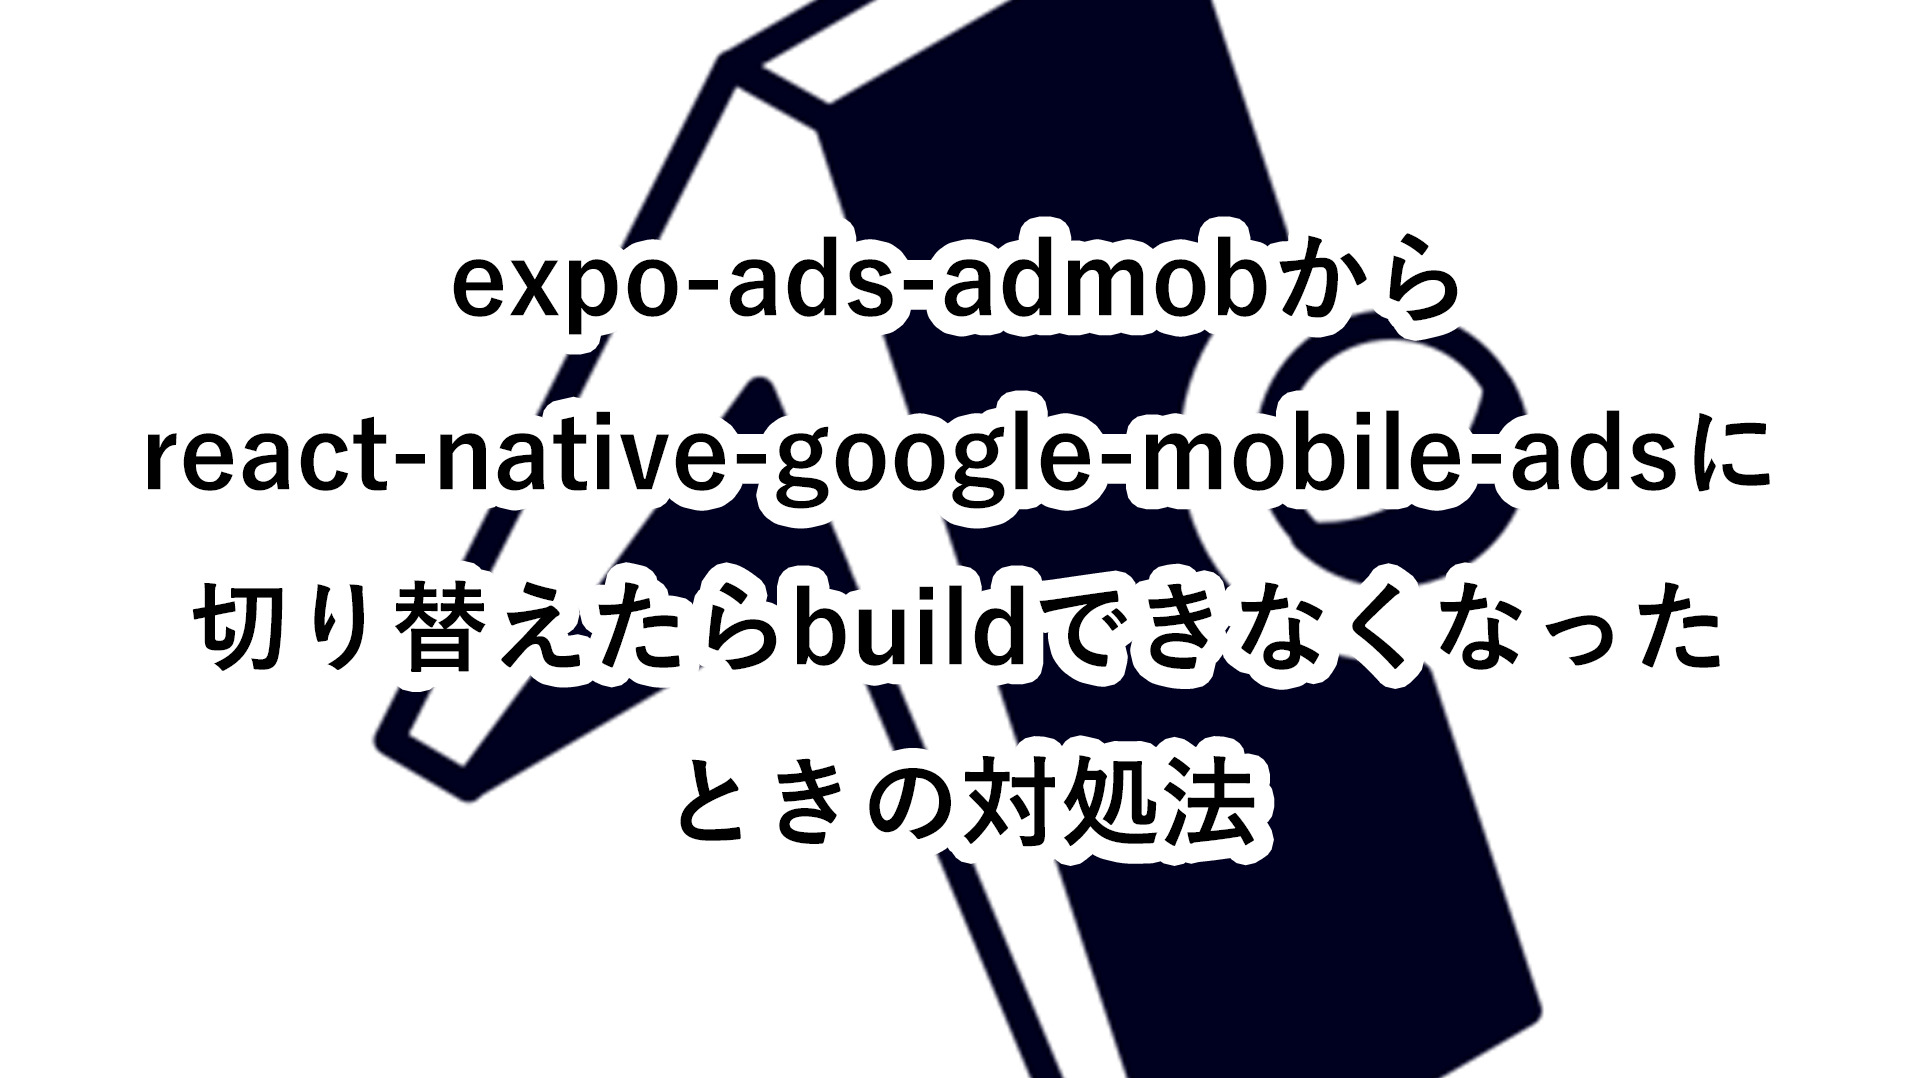 expo-ads-admobからreact-native-google-mobile-adsに切り替えたらbuildできなくなったときの対処法